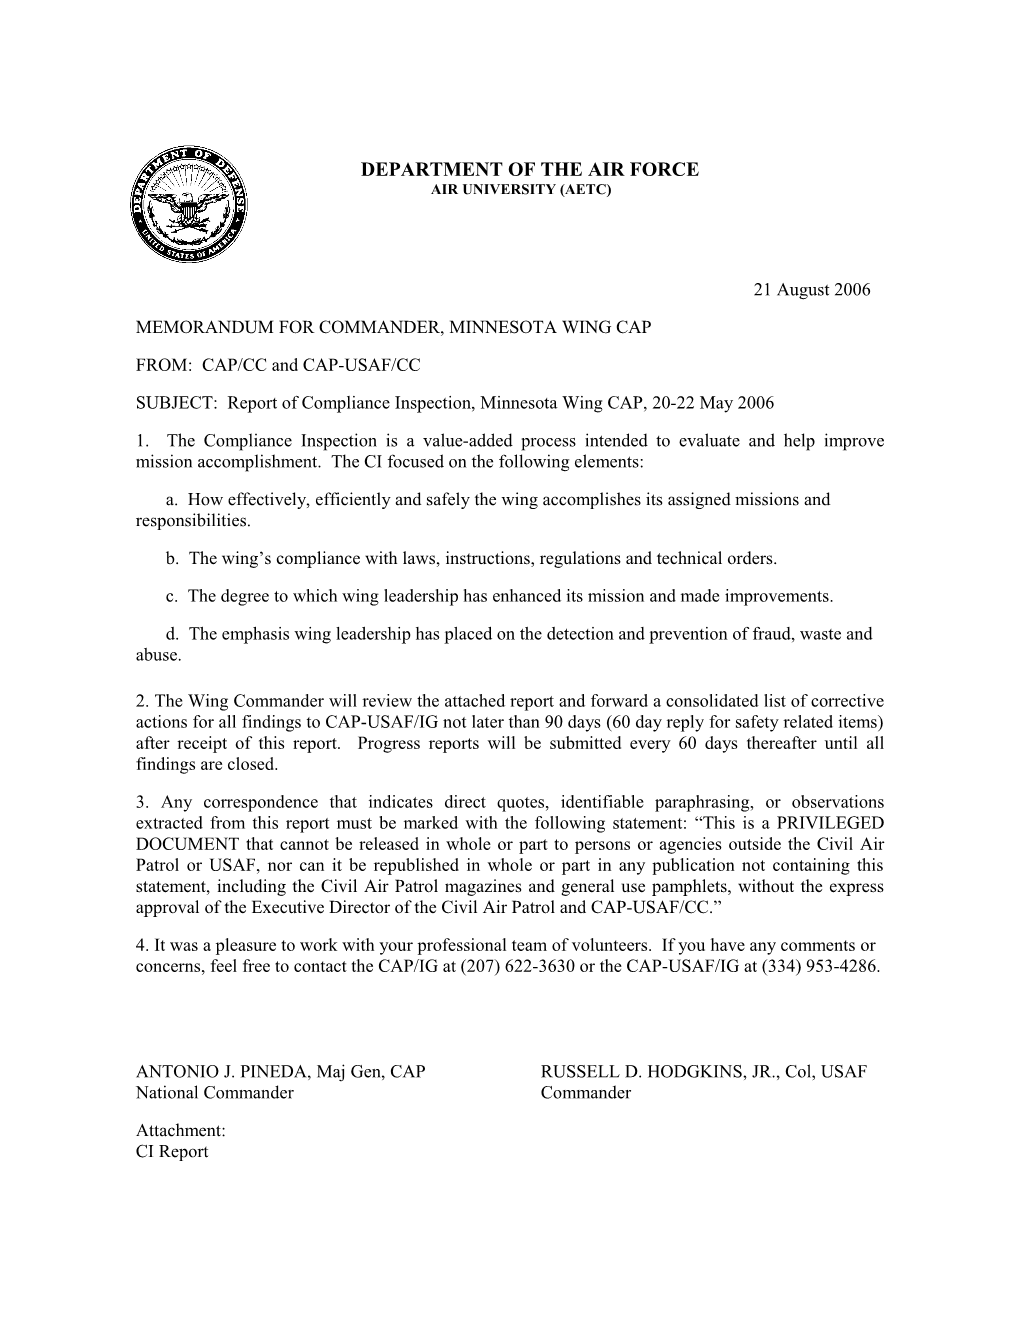 Memorandum for Commander, Minnesota Wing Cap